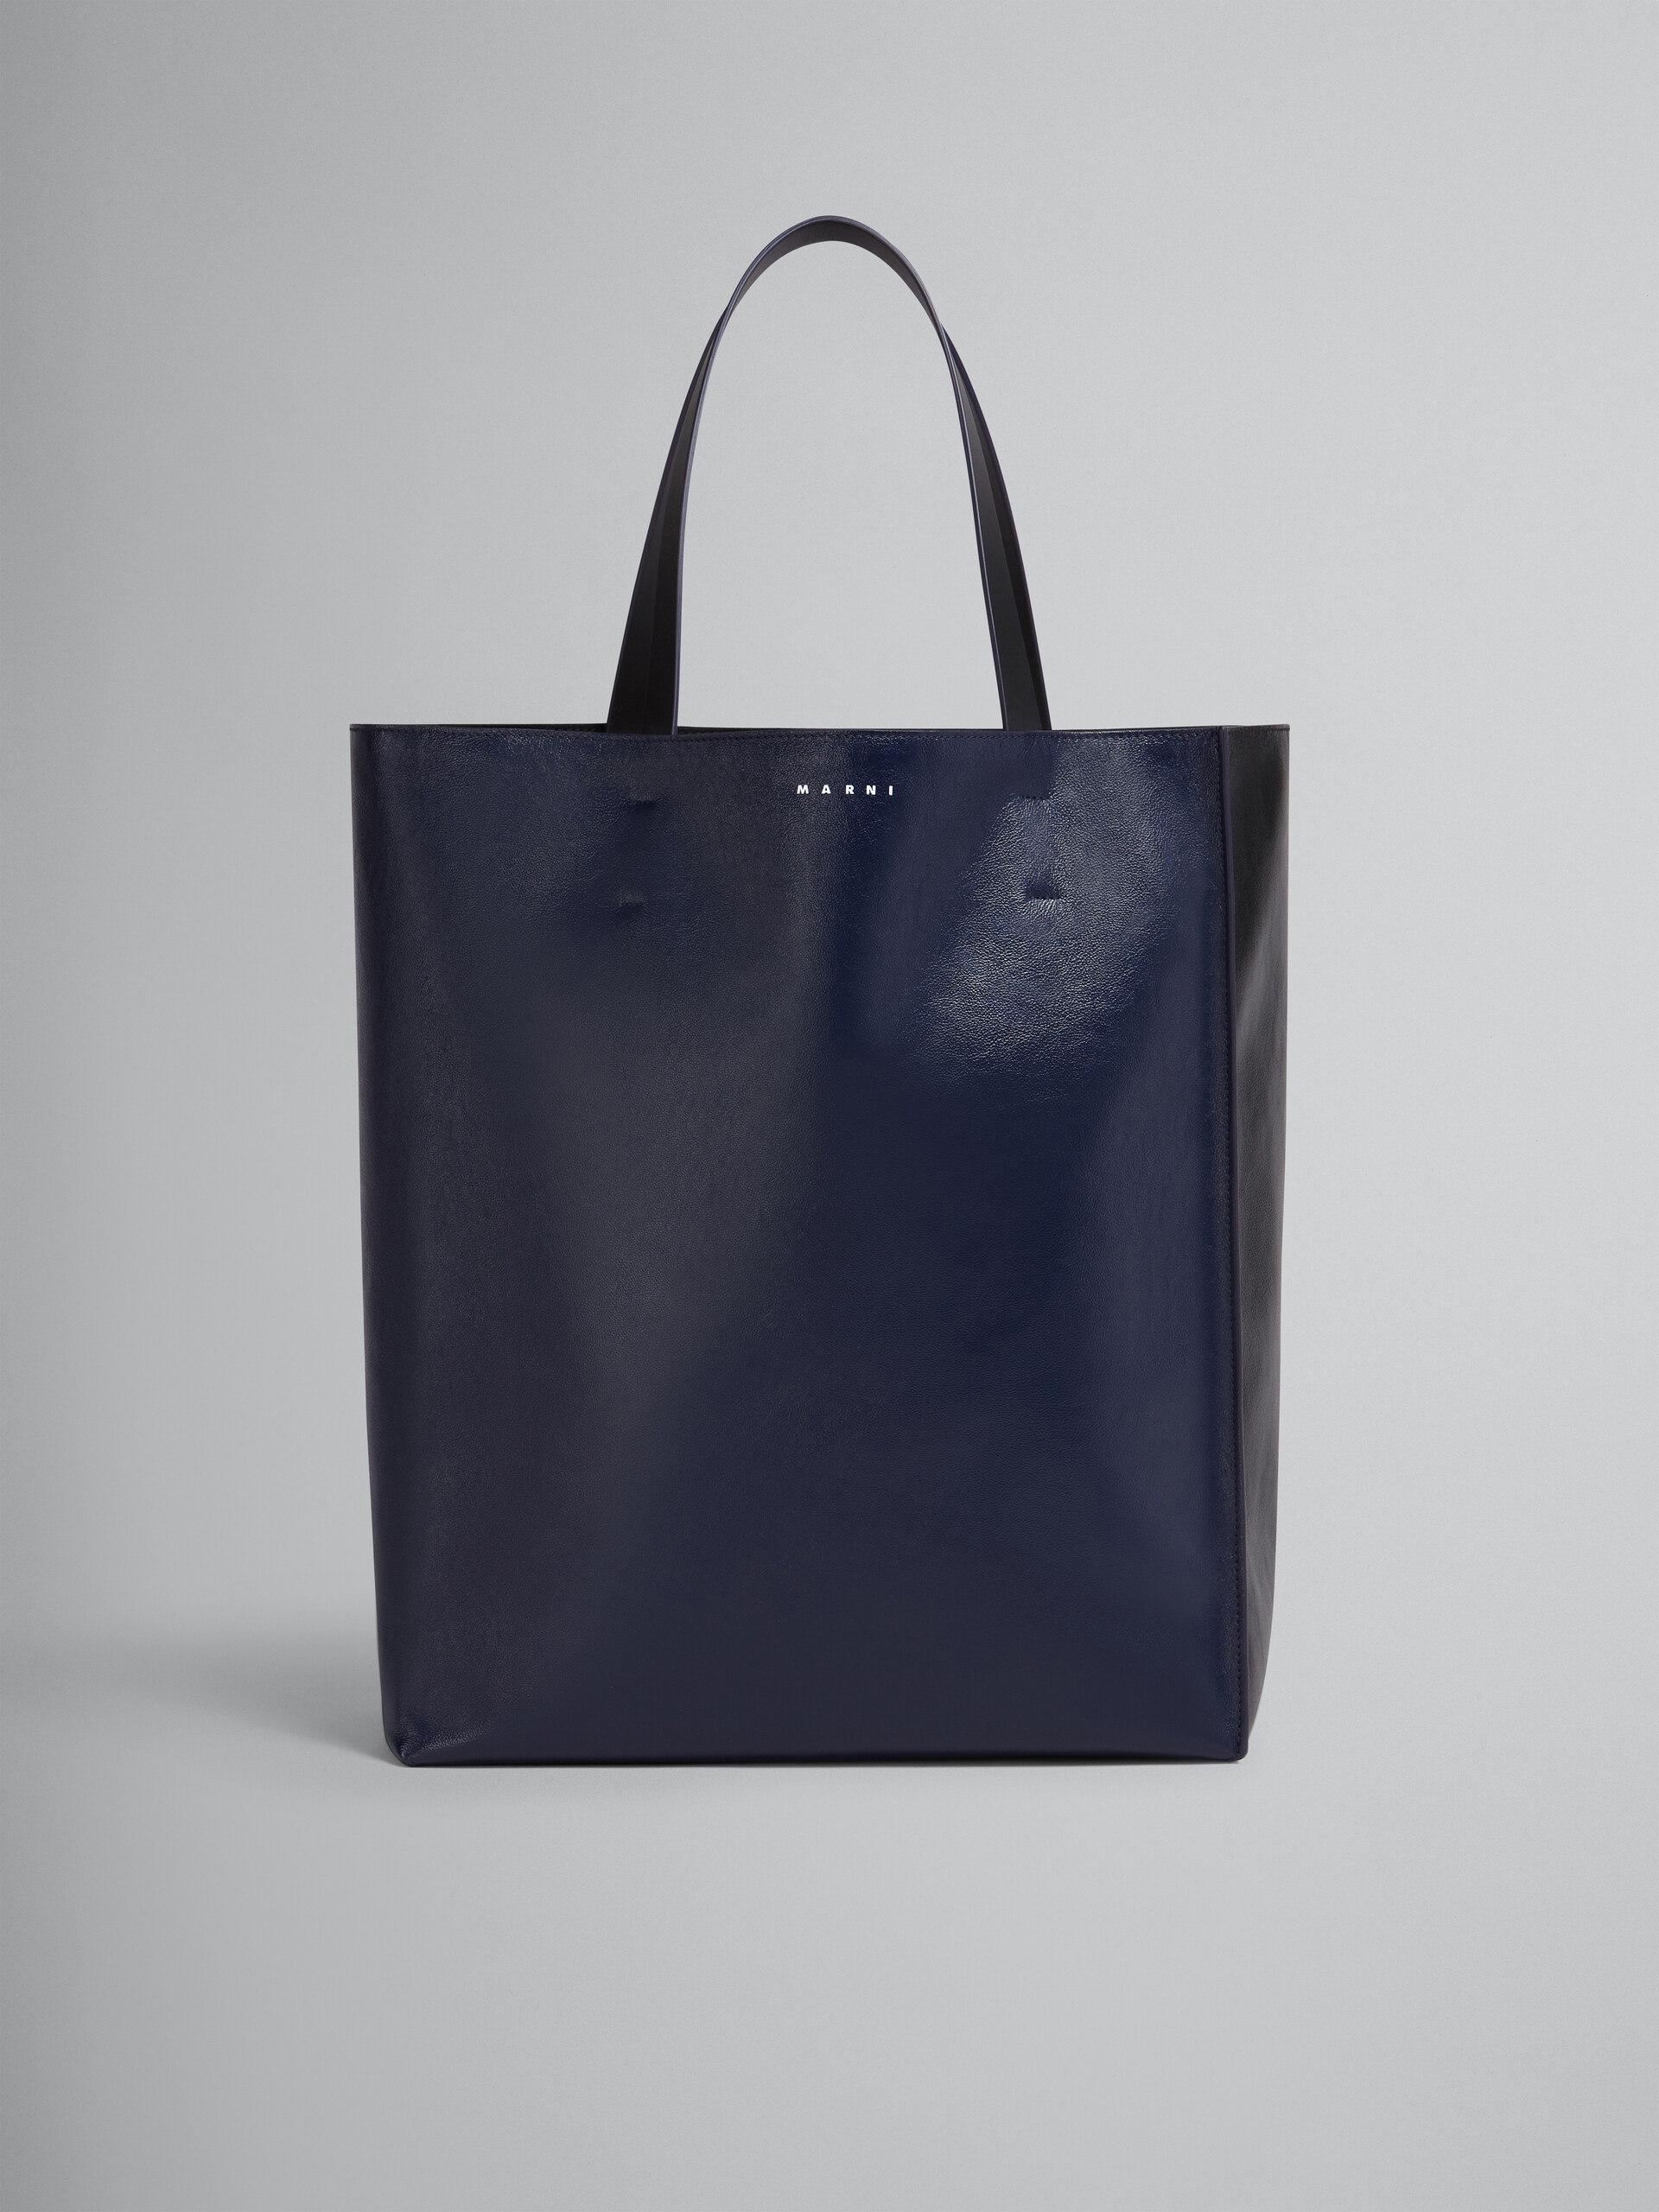 MUSEO SOFT bag grande in pelle lucida blu e nera - Borse shopping - Image 1